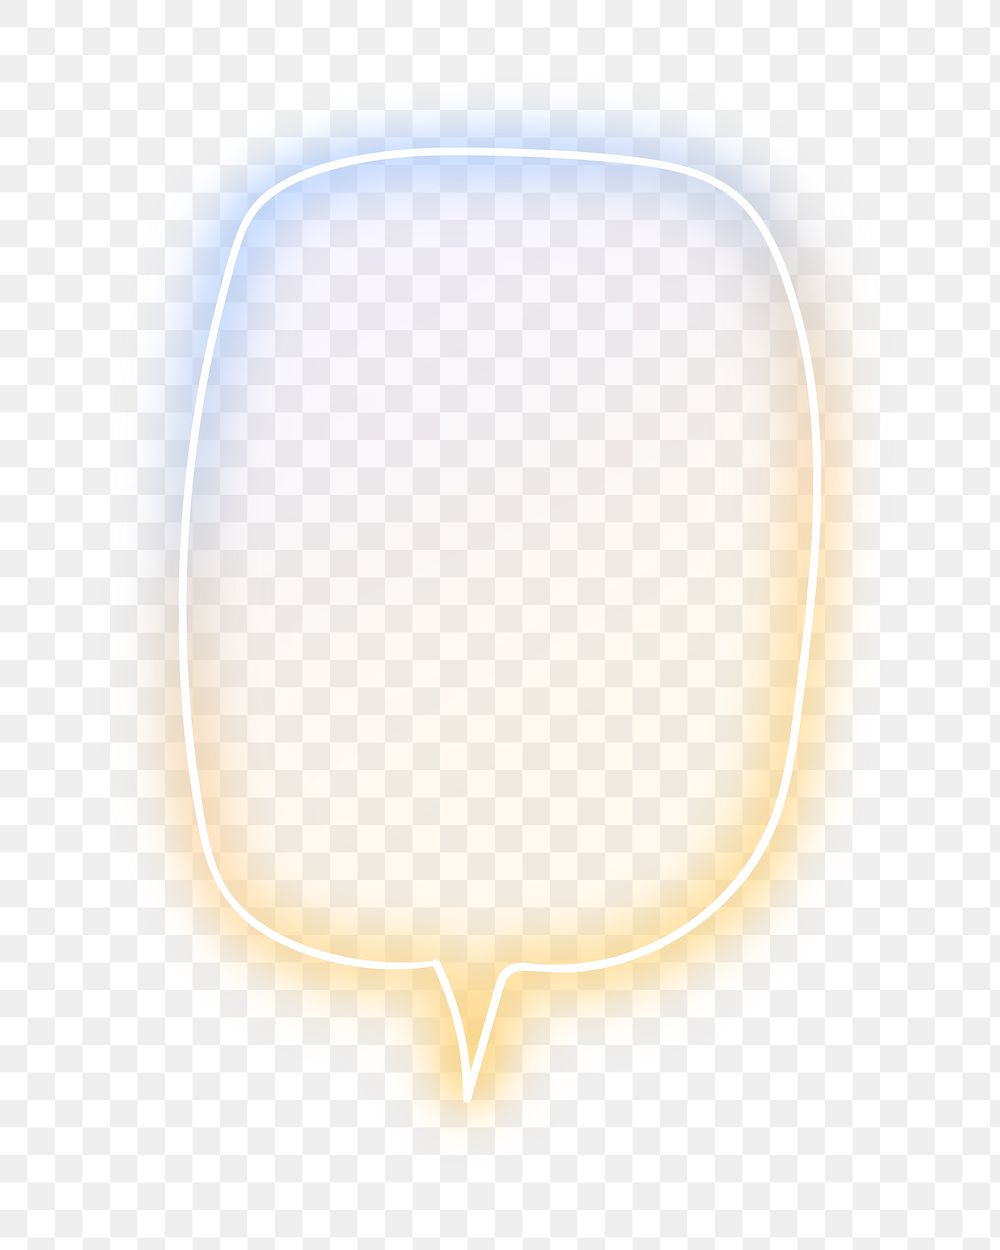 Glowing neon speech balloon design element